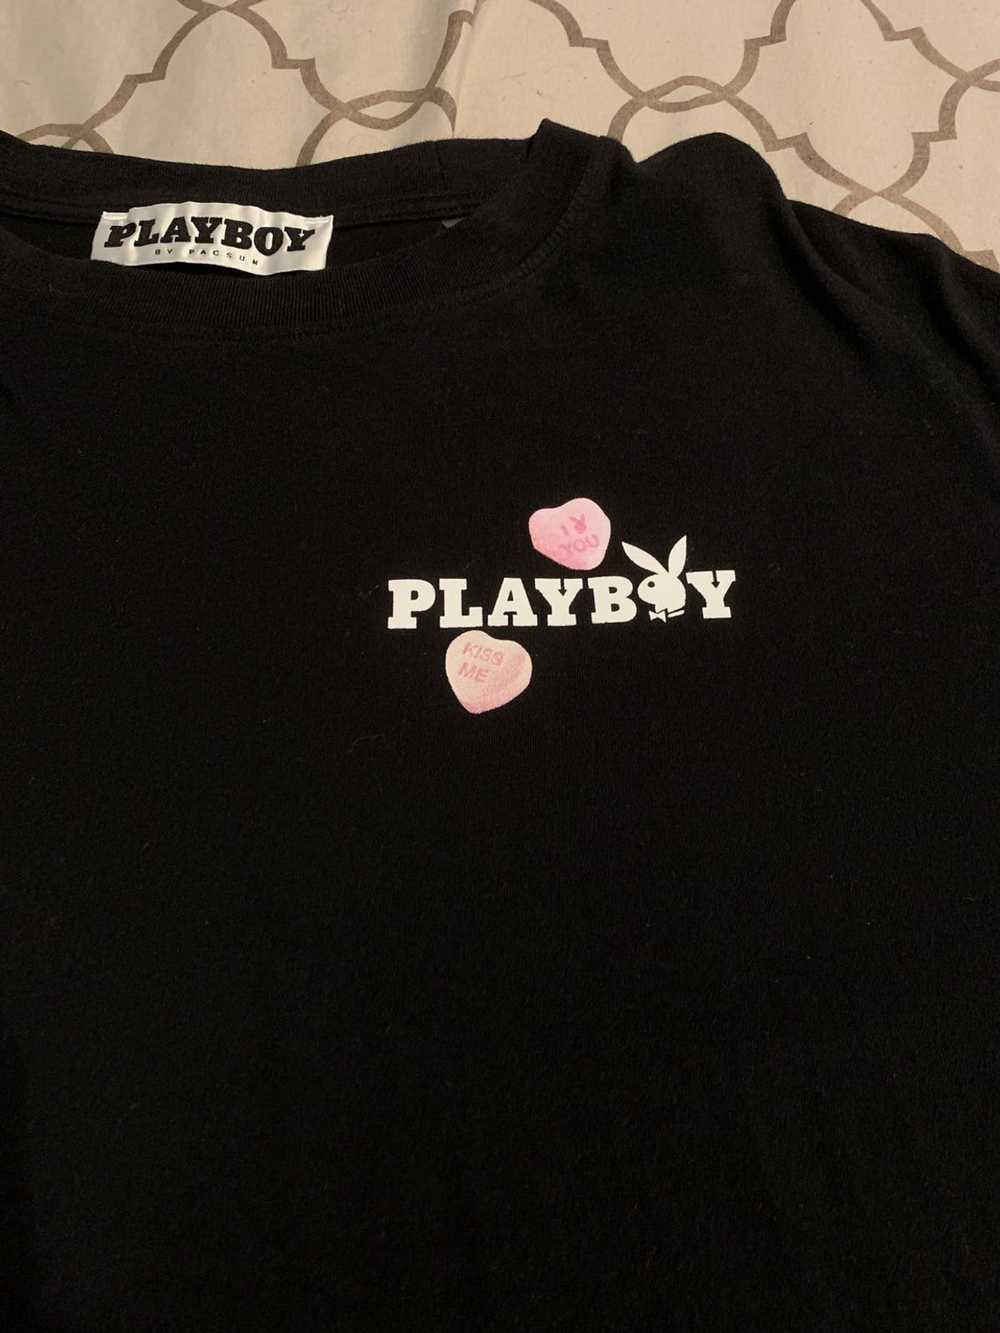 Playboy playboy long sleeve - image 2